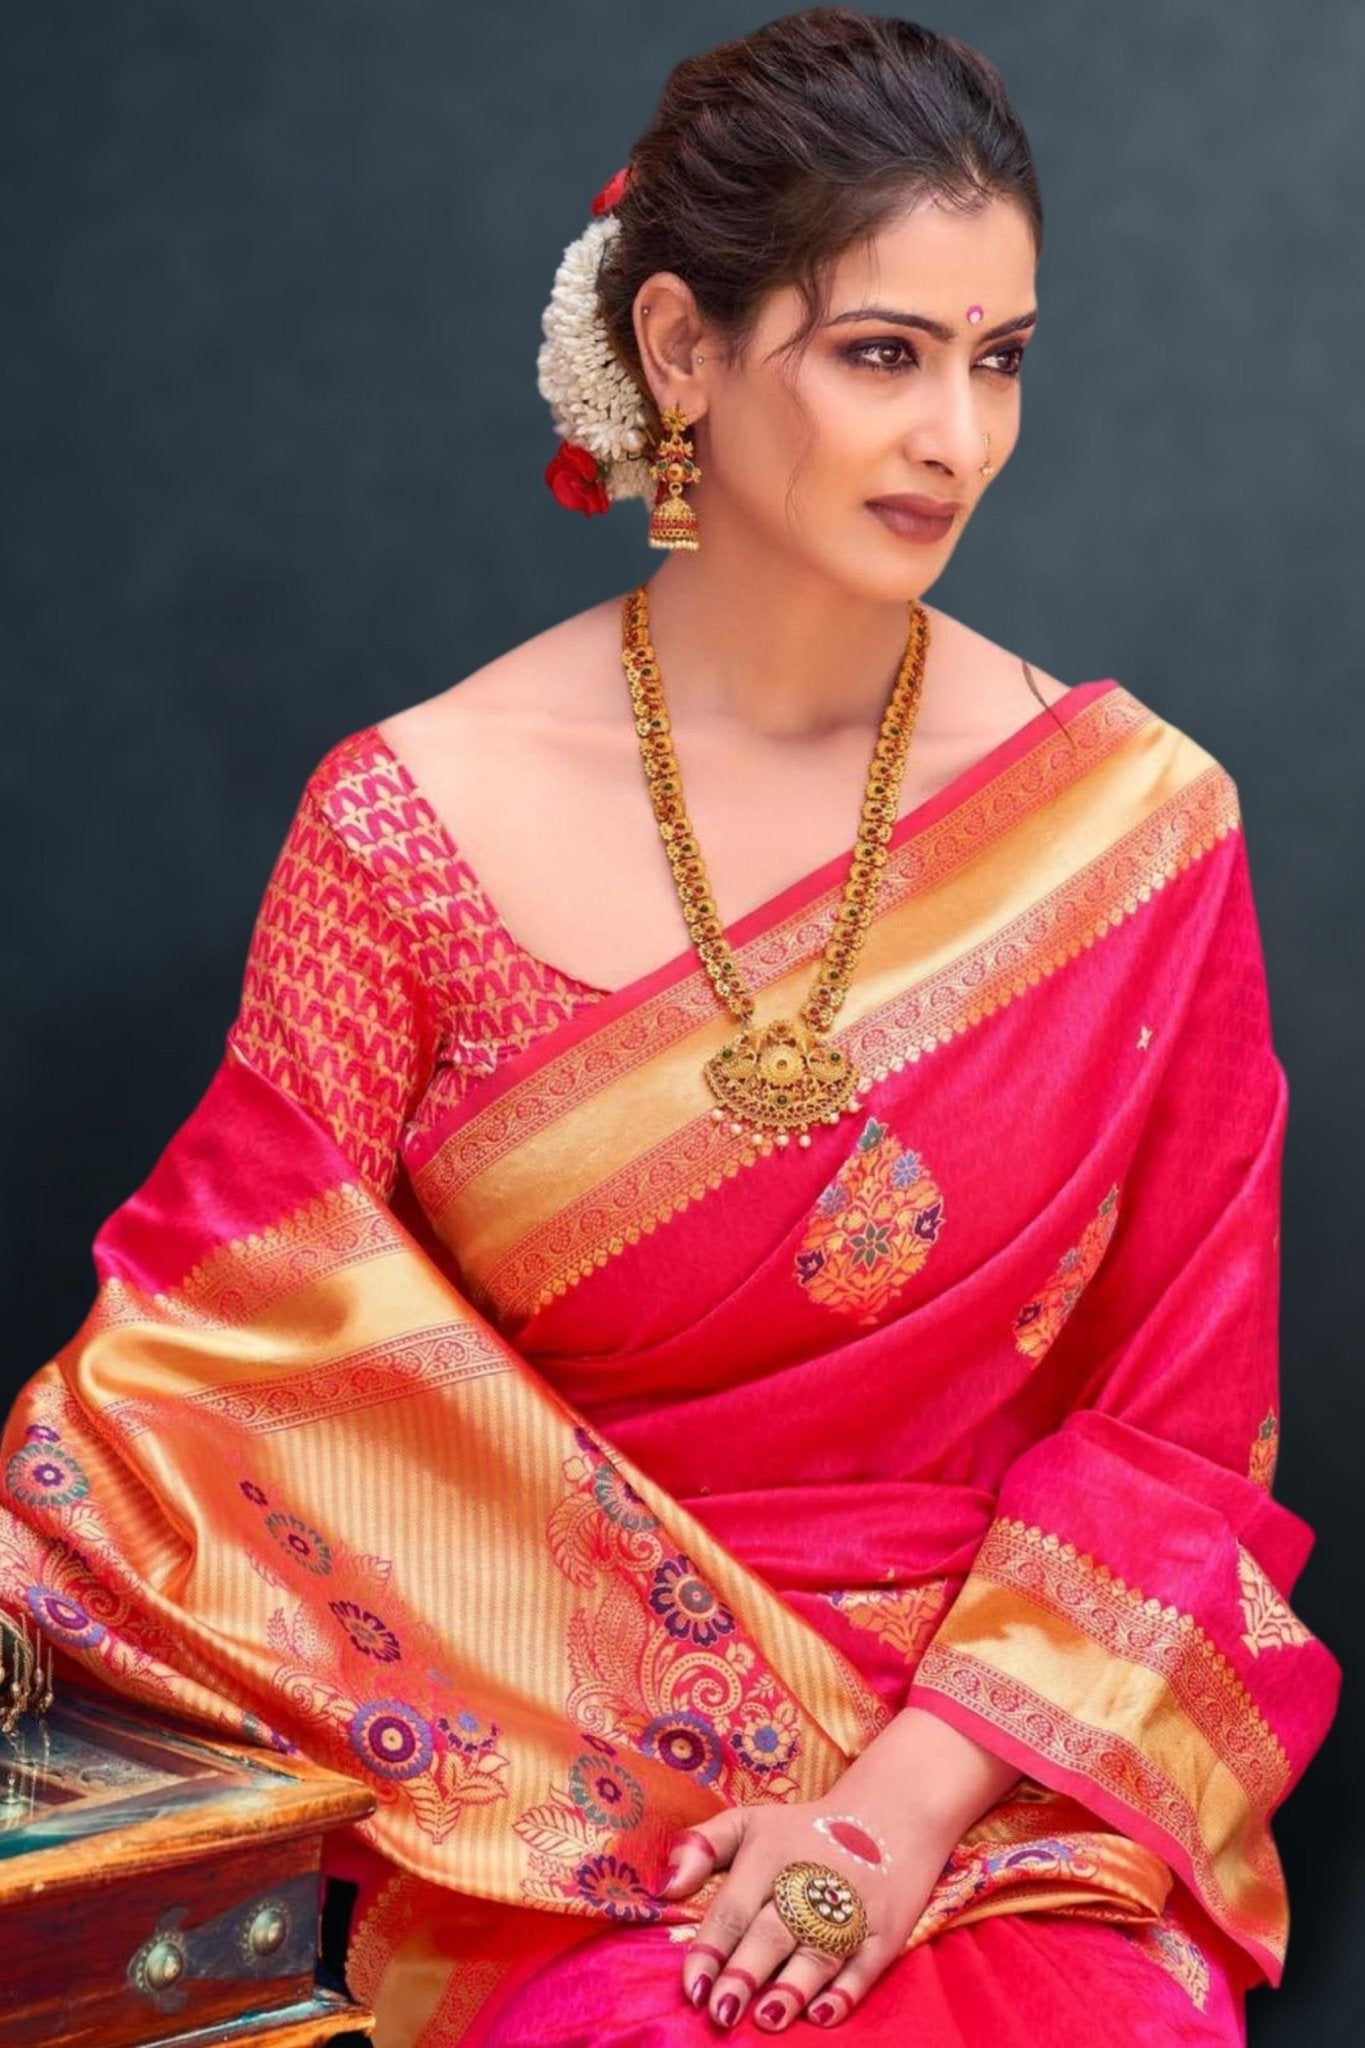 banarasi saree styling Archives - Cherry on Top | Beauty & Lifestyle